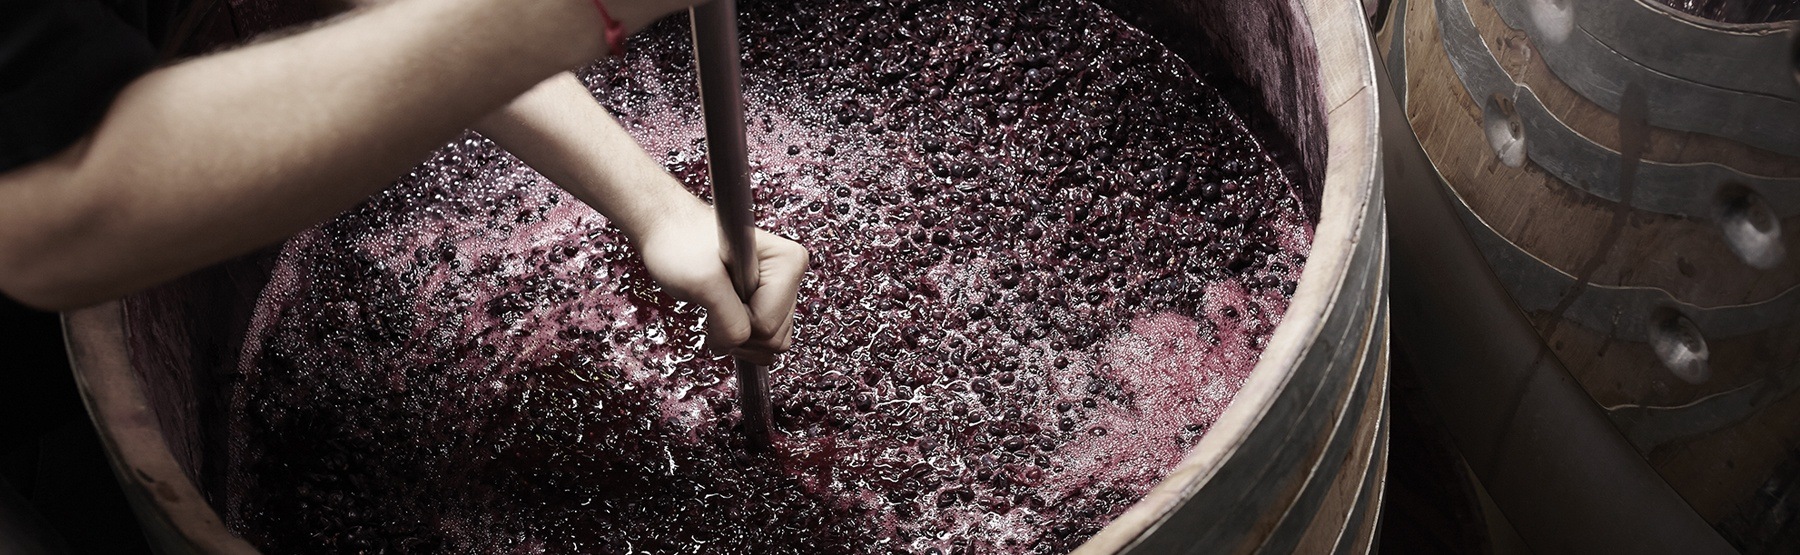 Ферментация вина. Брожение вина. Виноматериал. Виноматериал сухой. Производство вина.